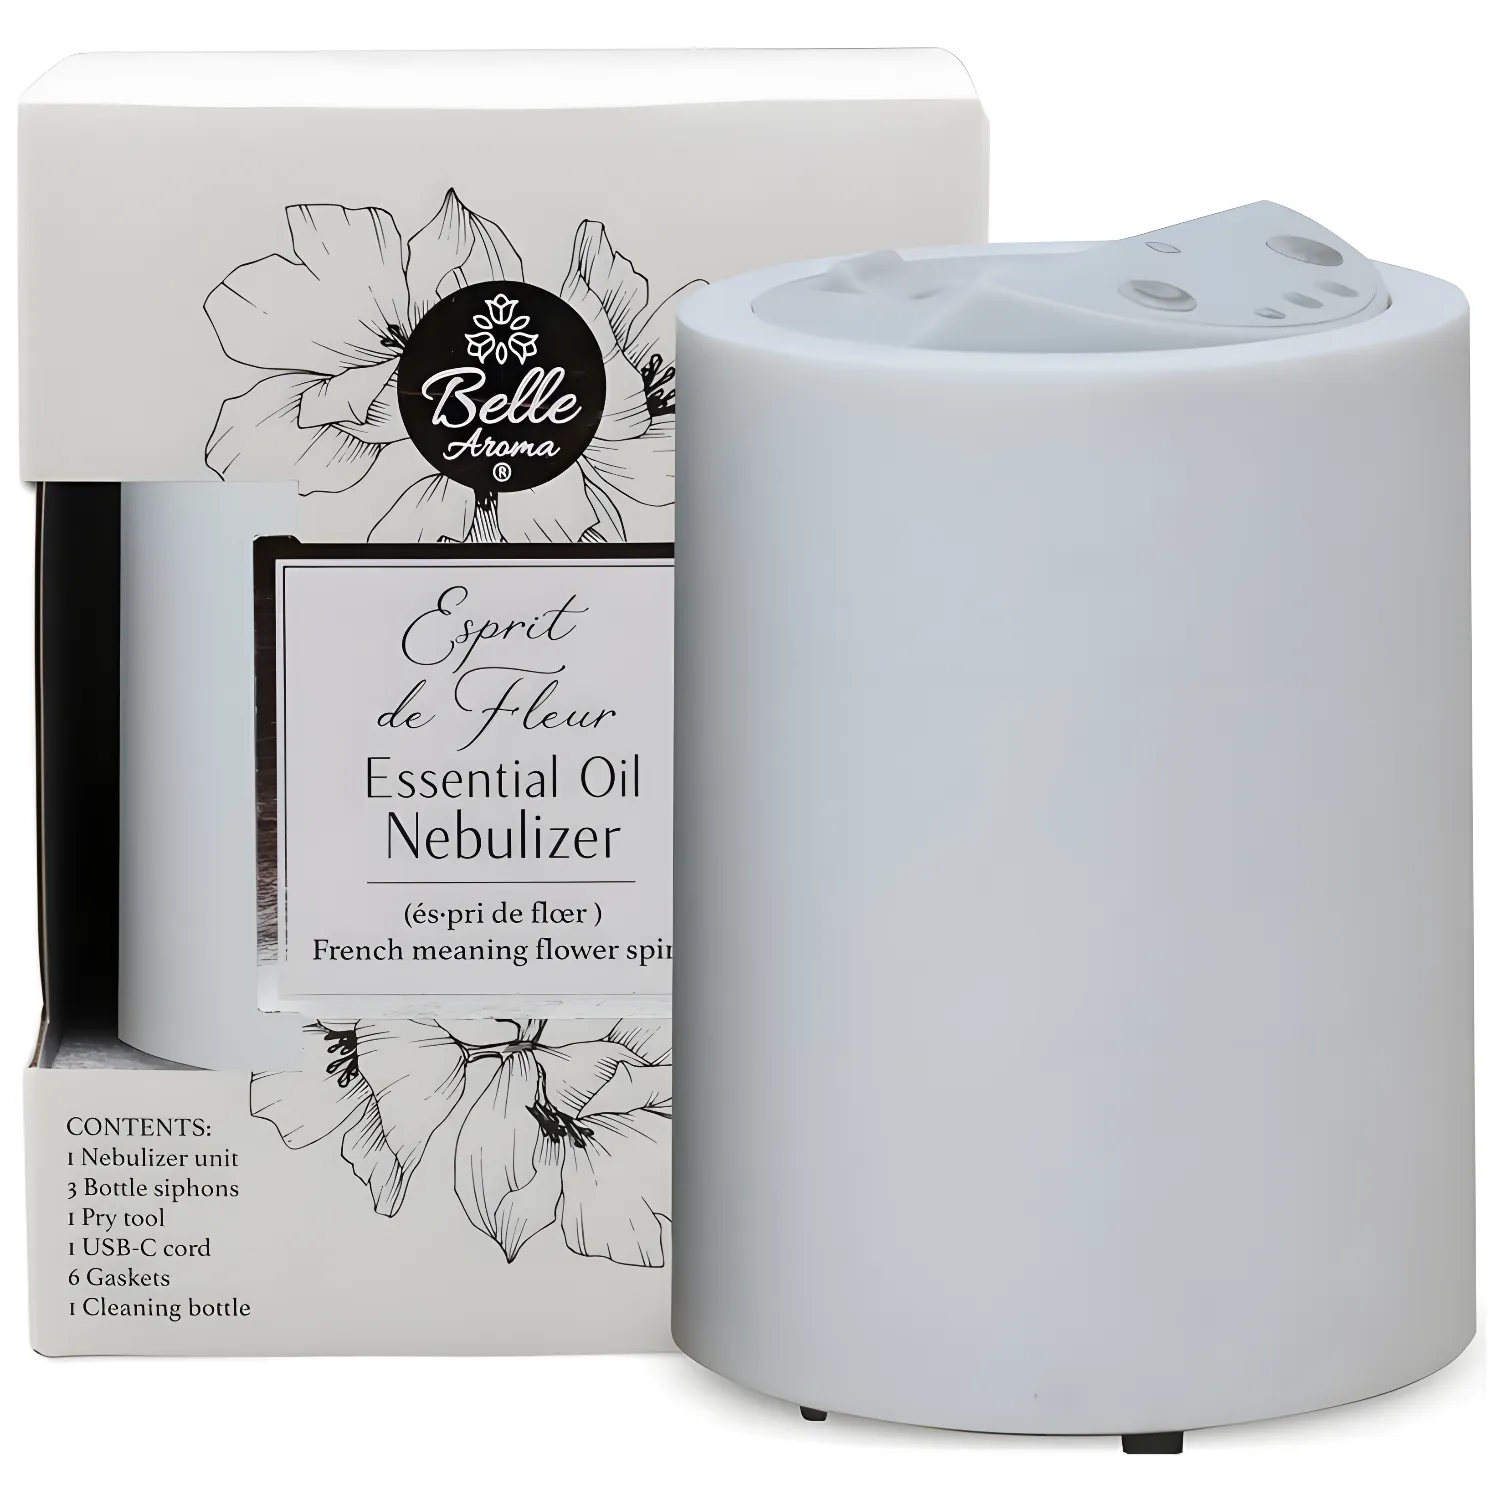 Free Belle Aroma Esprit De Fleur Essential Oil Nebulizer